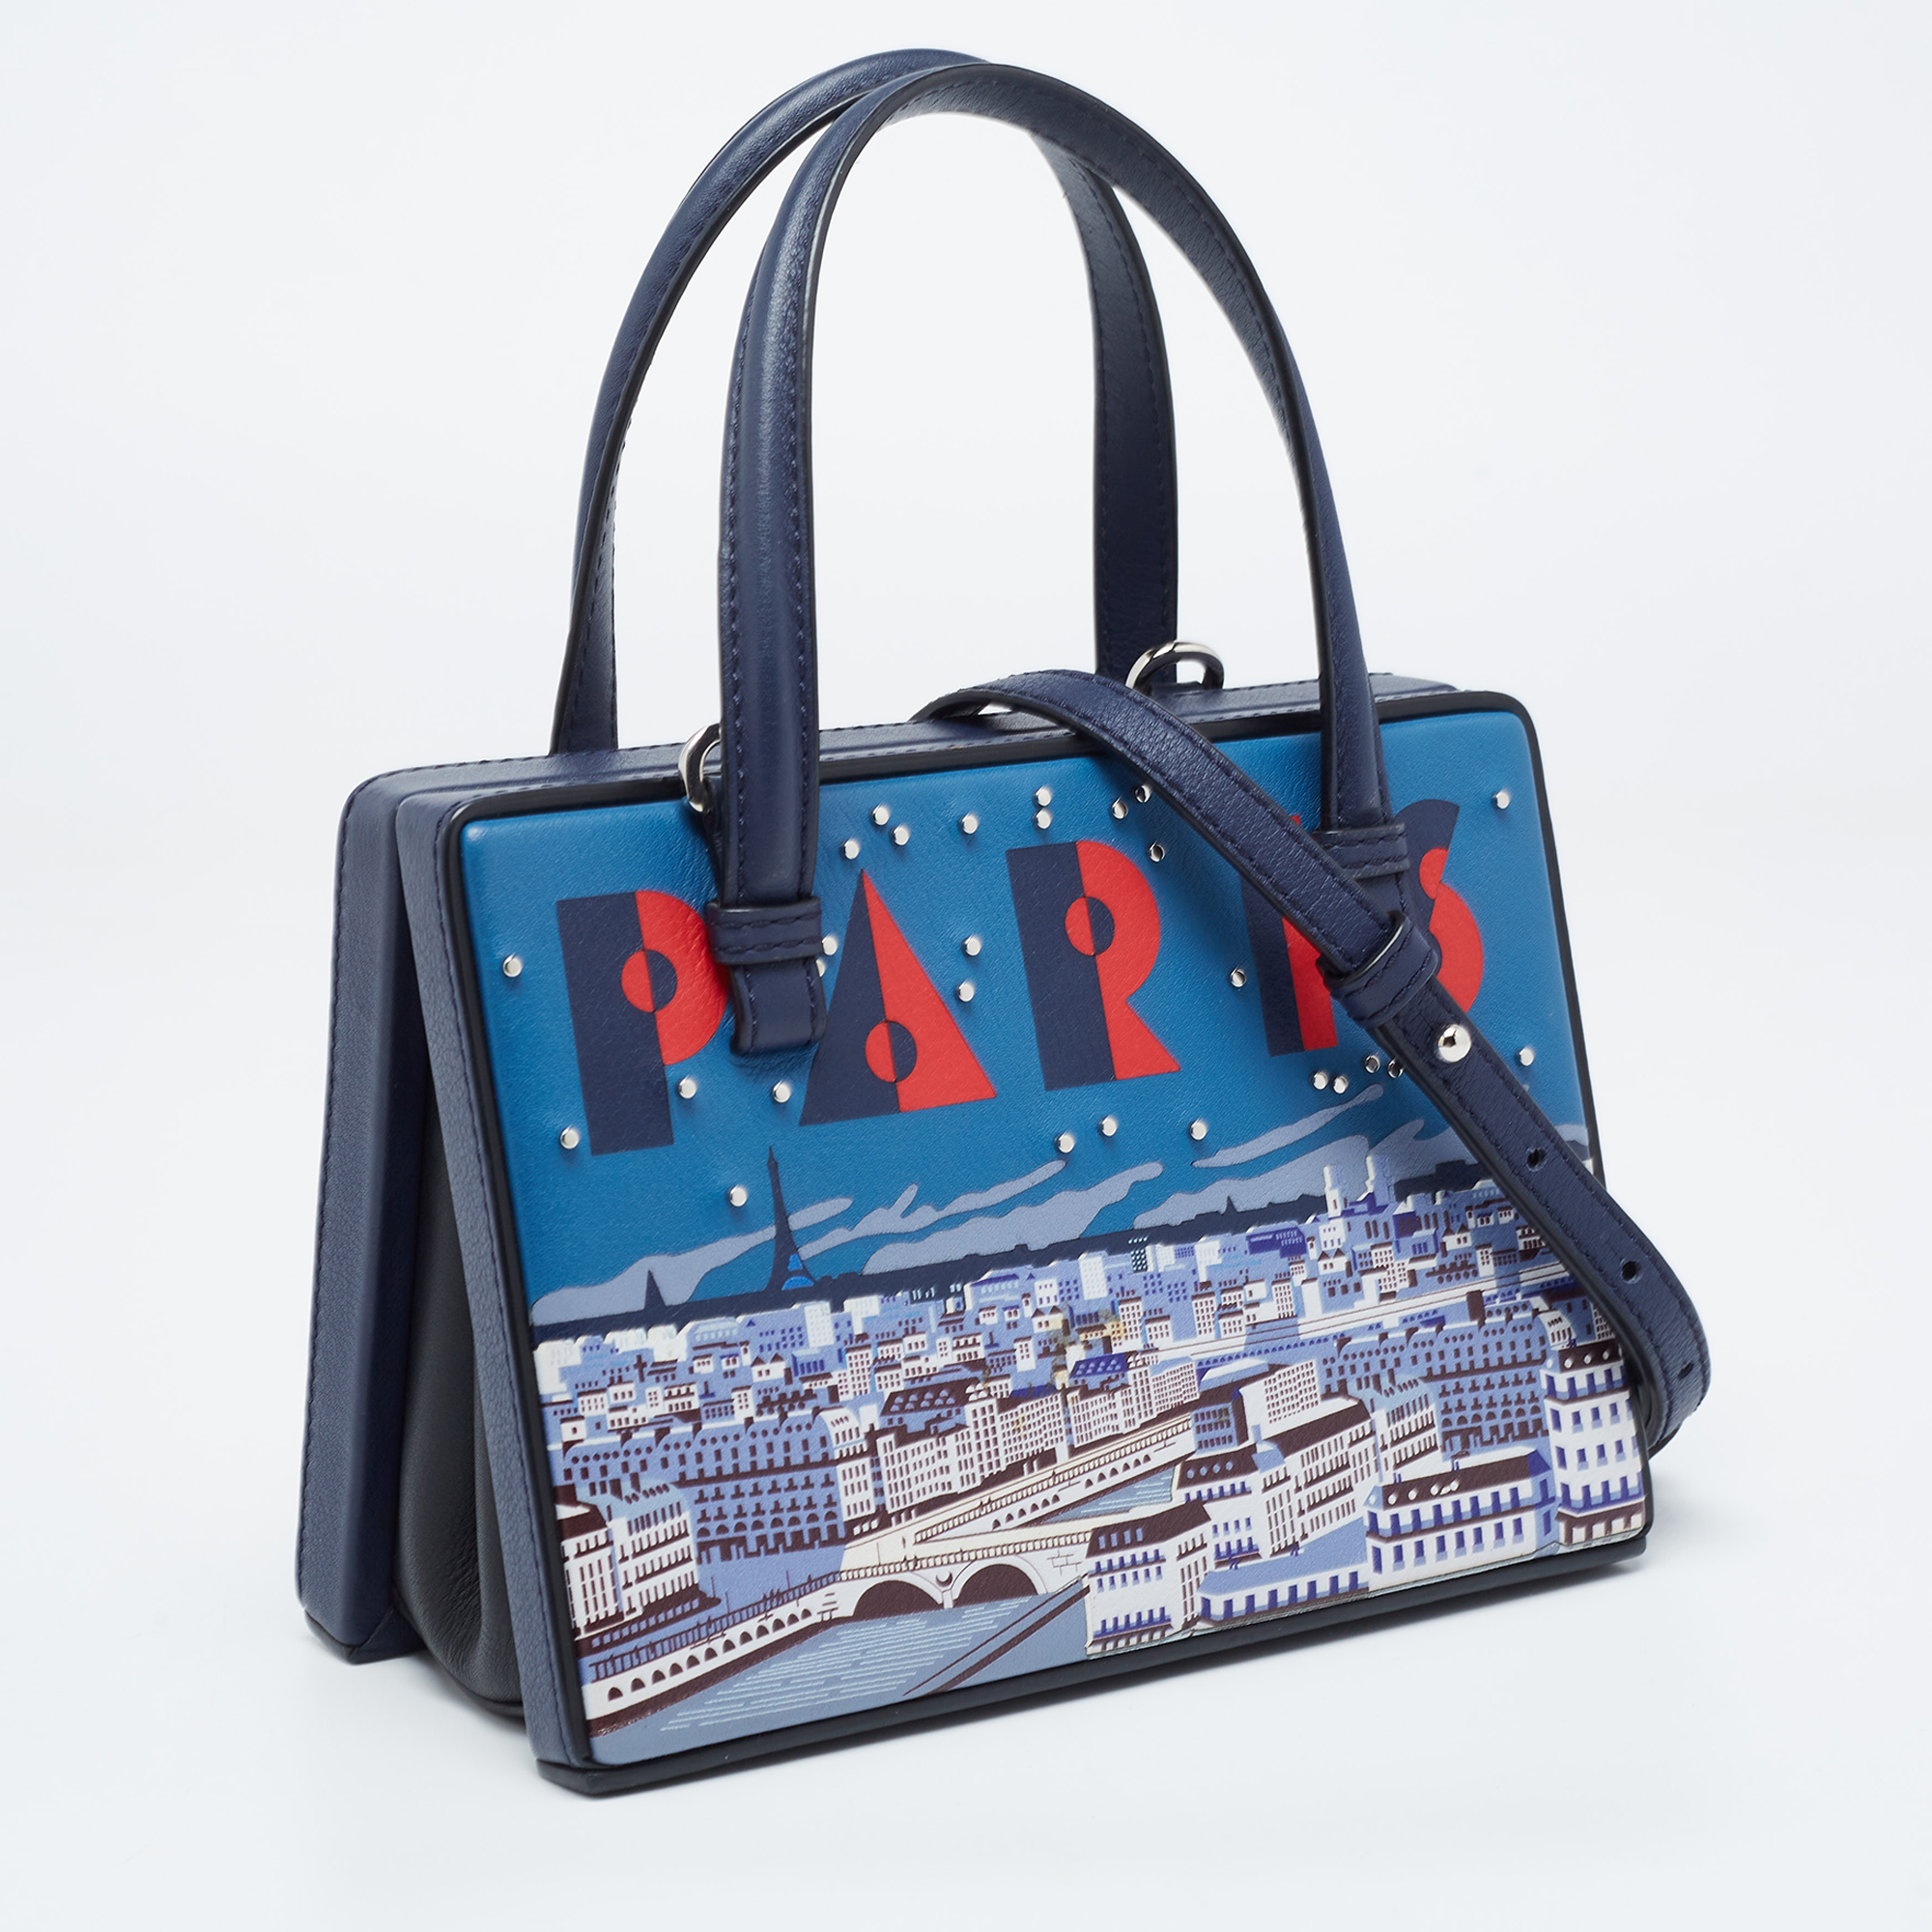 Loewe Navy Blue Leather Small Paris Postal Bag